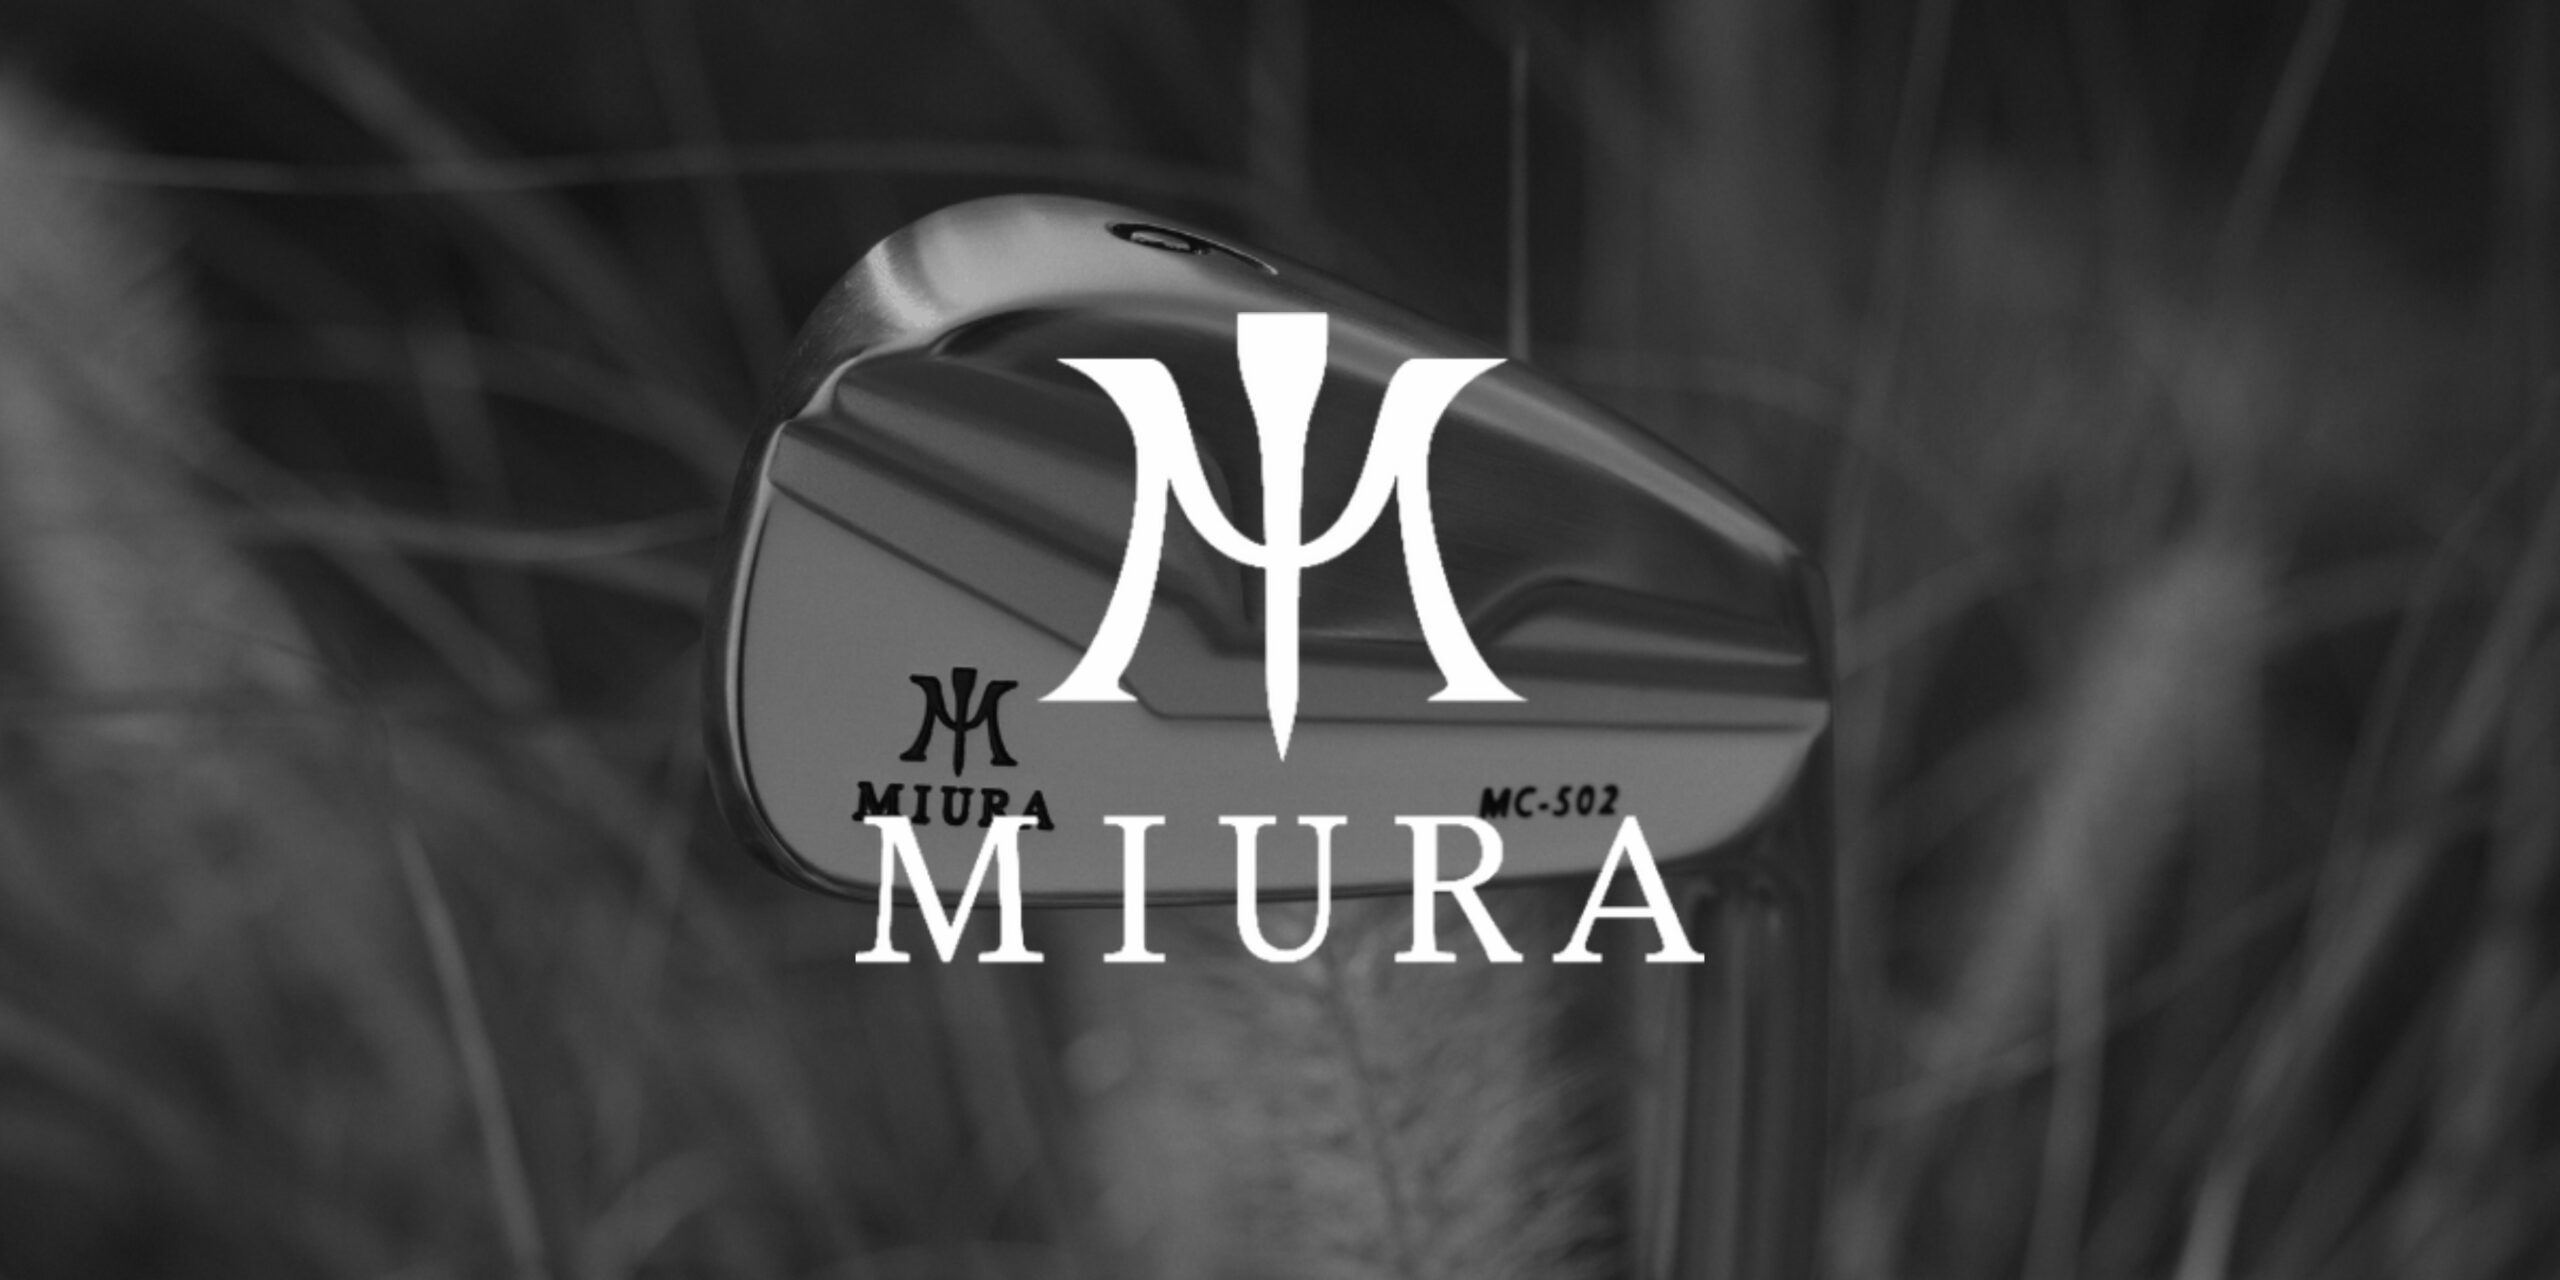 Du betrachtest gerade Miura